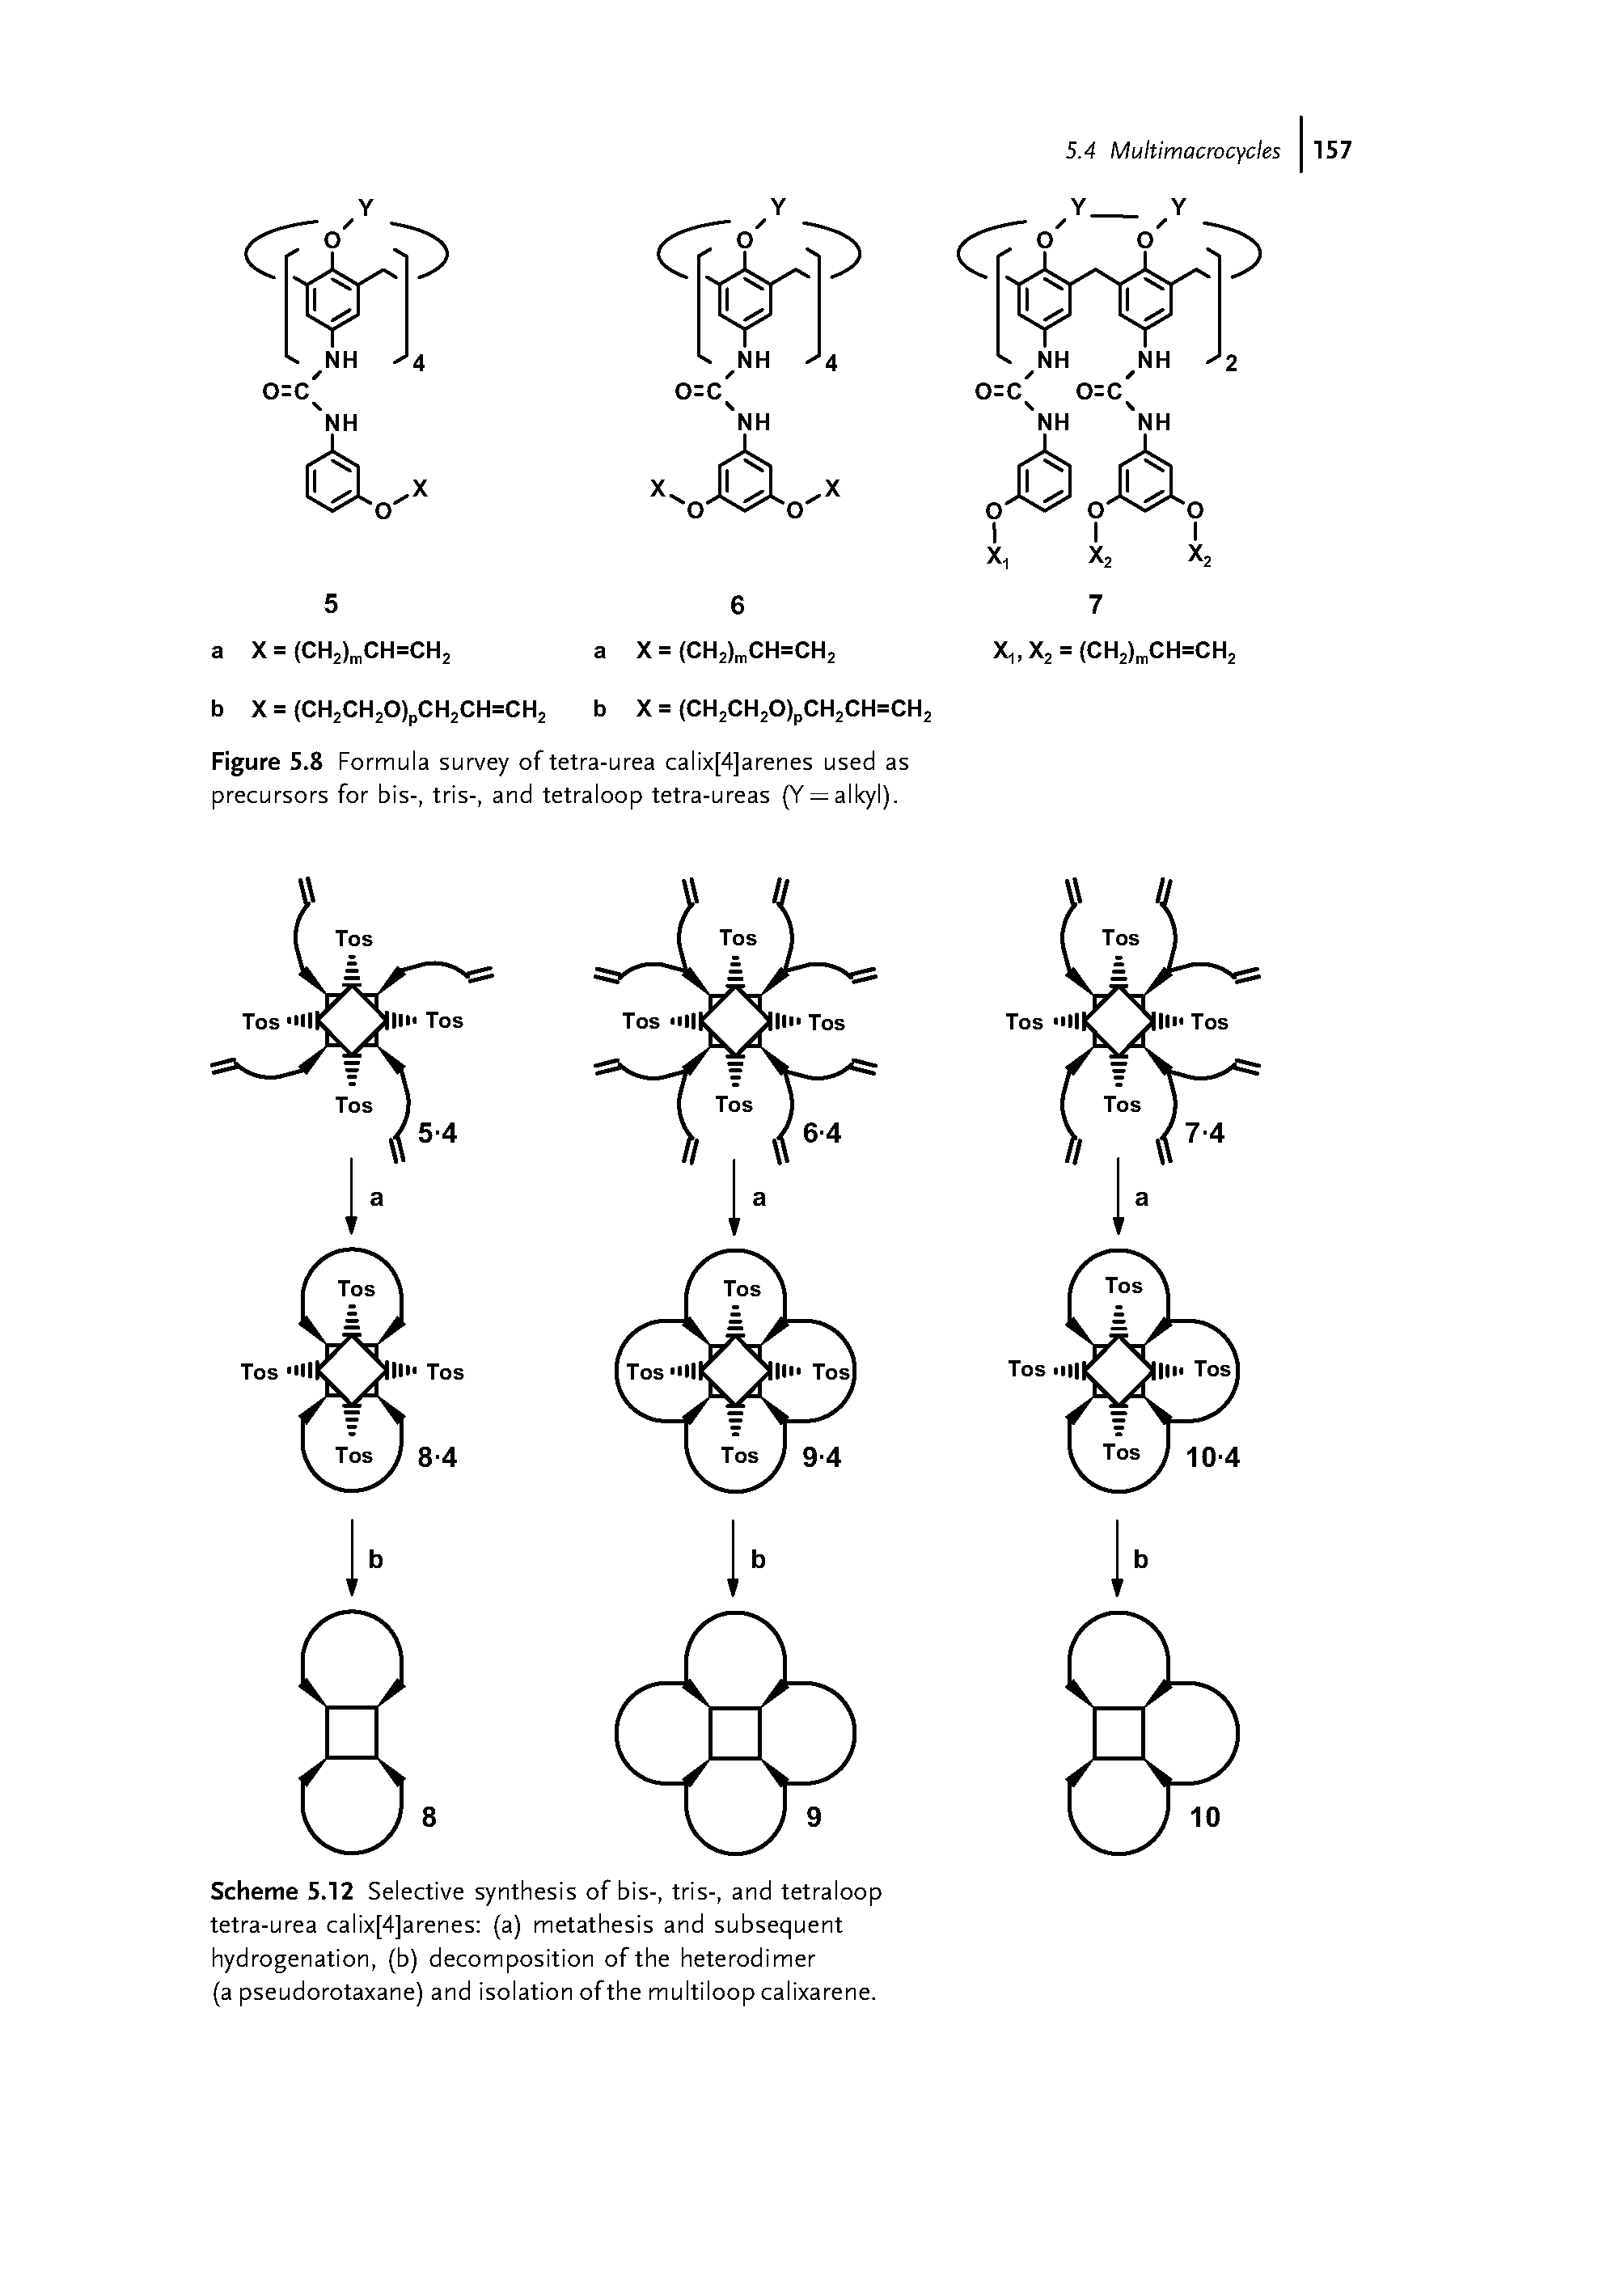 Figure 5.8 Formula survey of tetra-urea calix[4]arenes used as precursors for bis-, tris-, and tetraloop tetra-ureas (Y = alkyl).